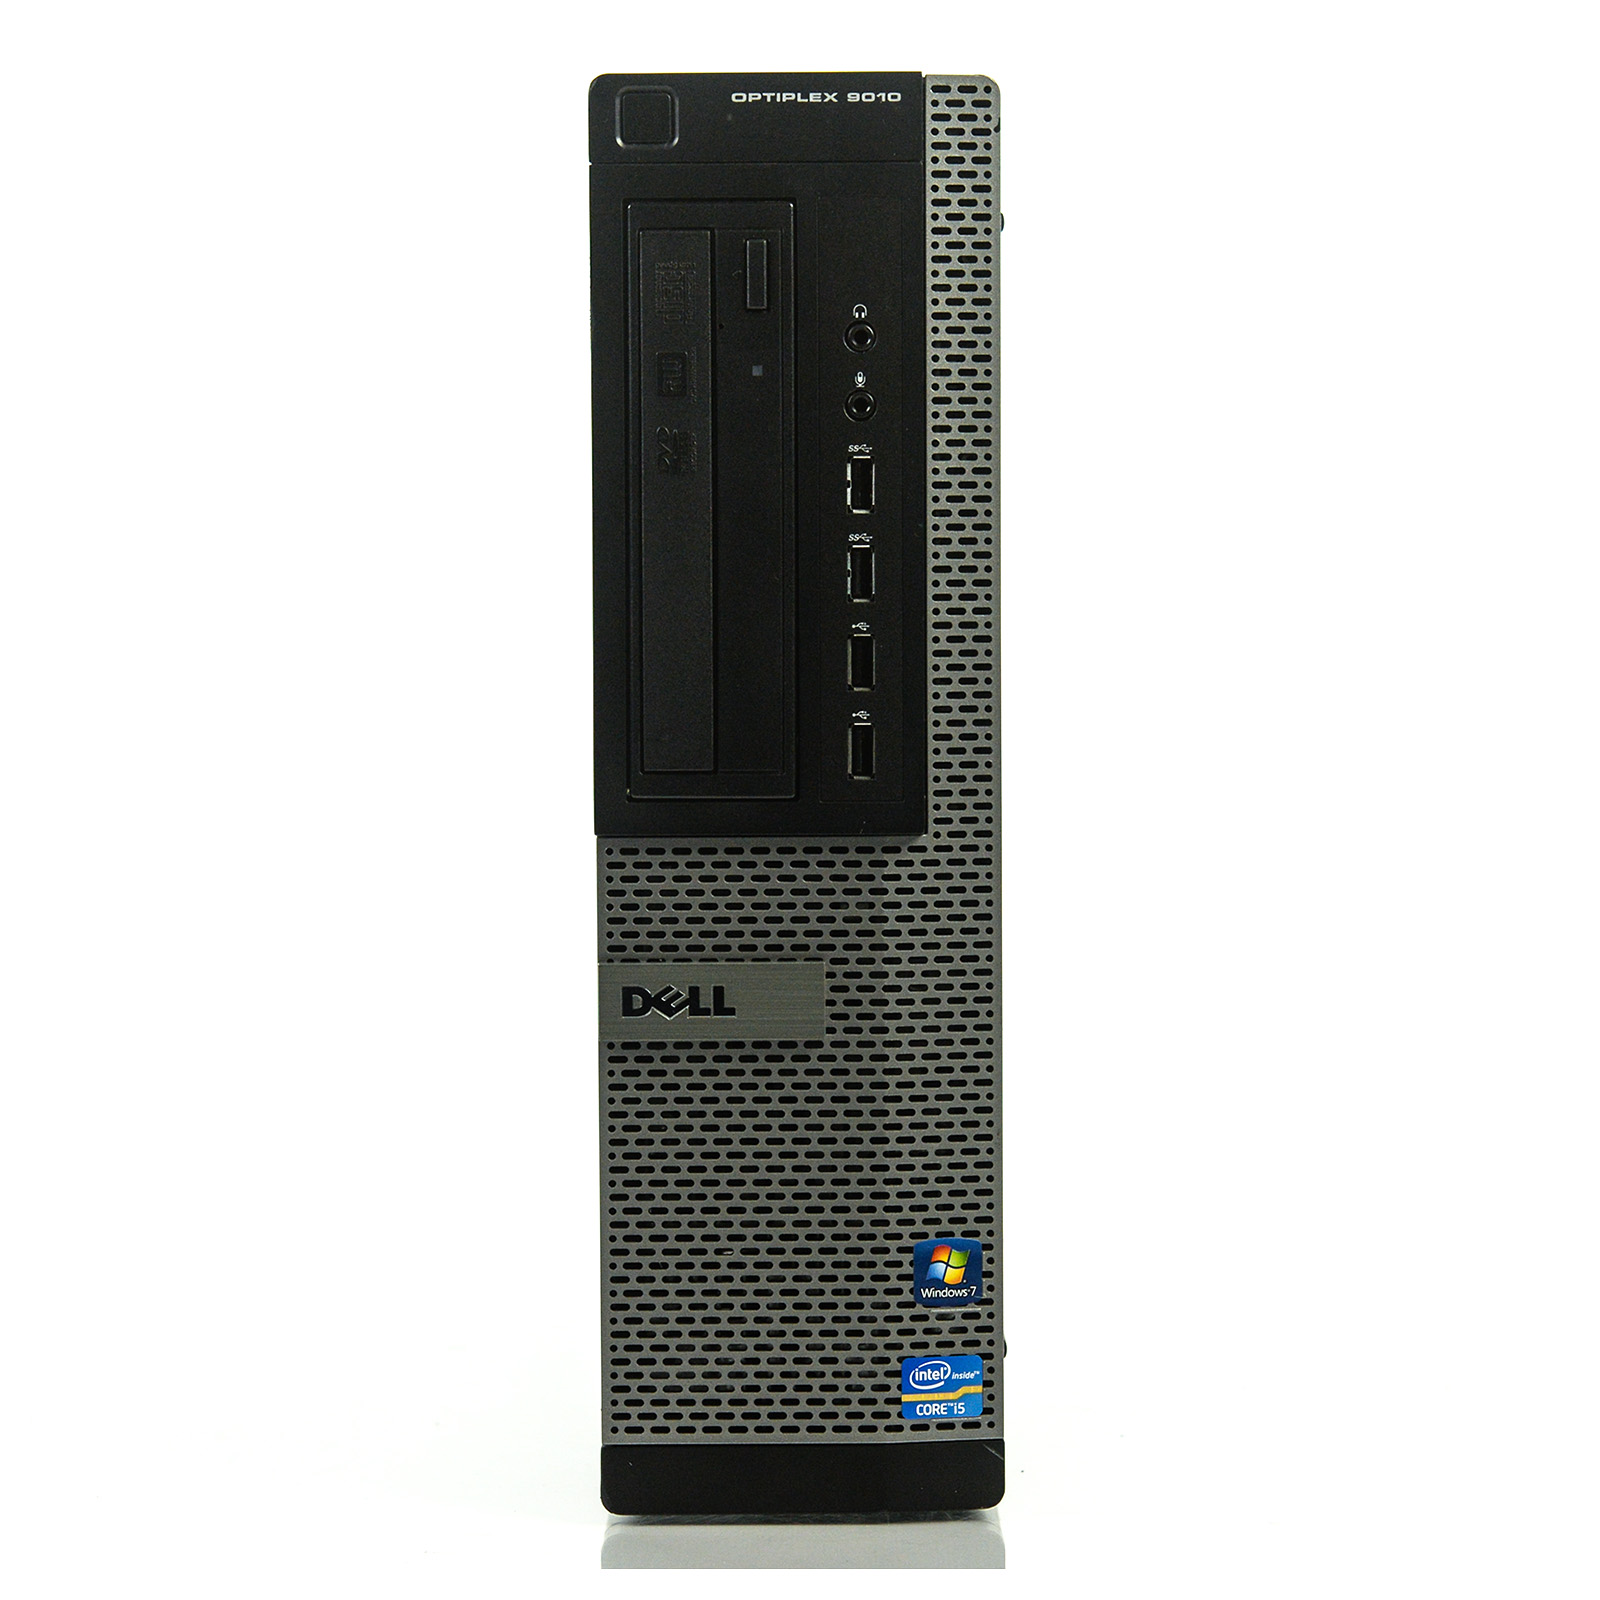 Restored Dell Optiplex 9020 Desktop Tower Computer, Intel Core i5, 16GB RAM, 1TB HD, DVD-ROM, Windows 10 Home 64 Bit, Black (Refurbished) - image 2 of 3